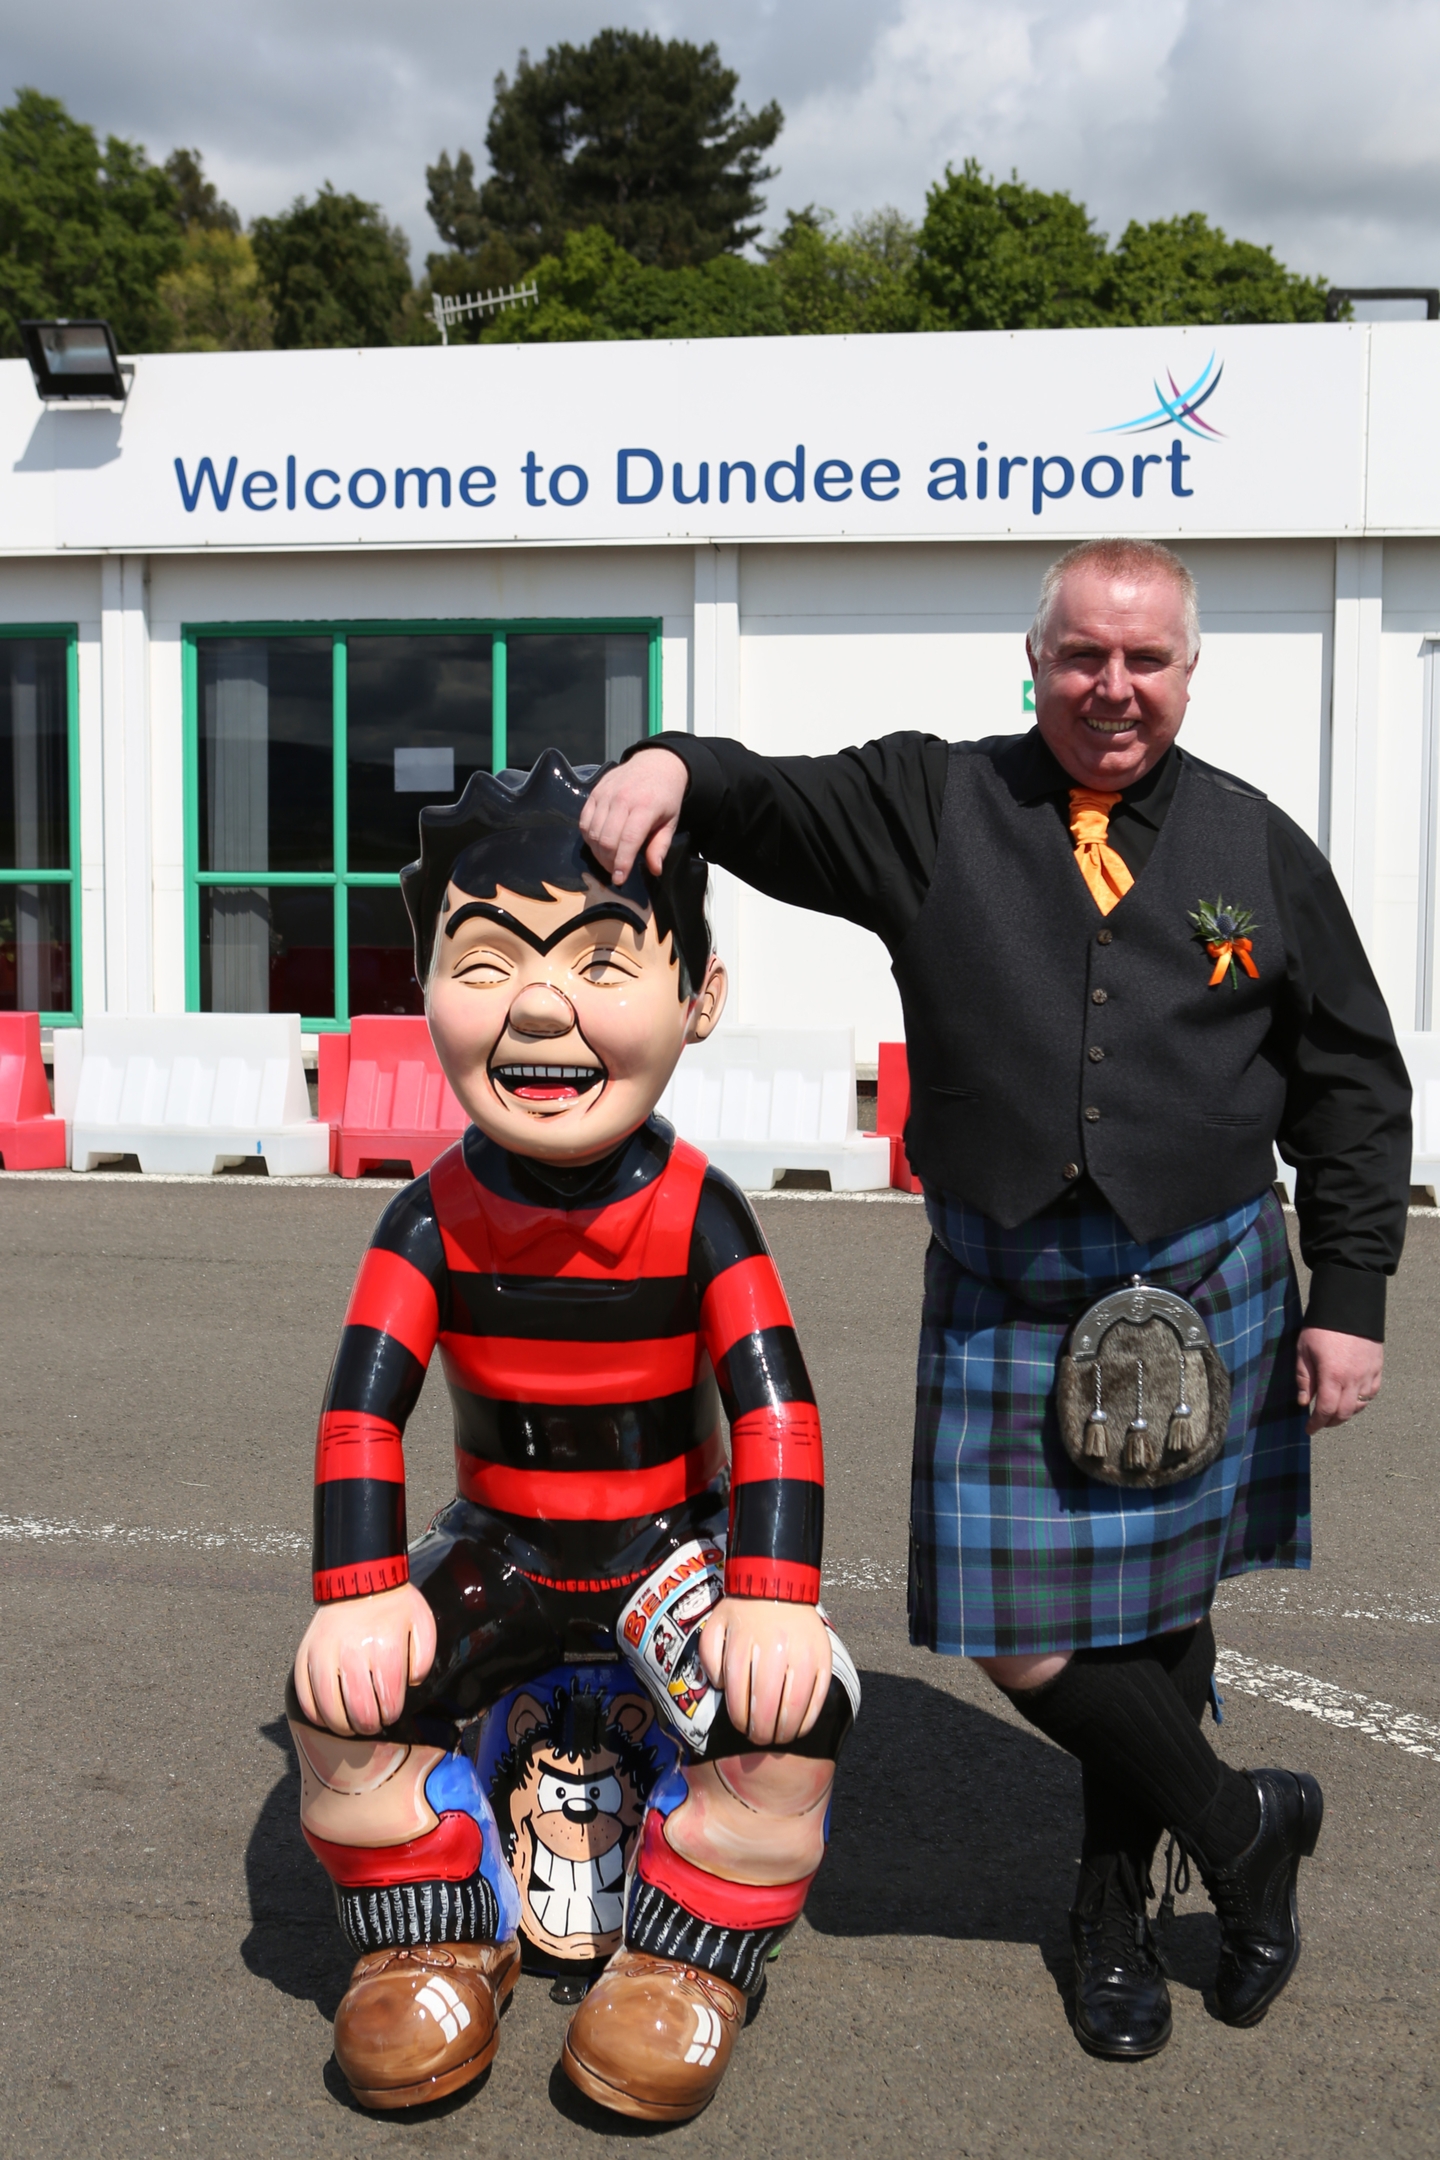 Dundee Airport manager Derrick Lang